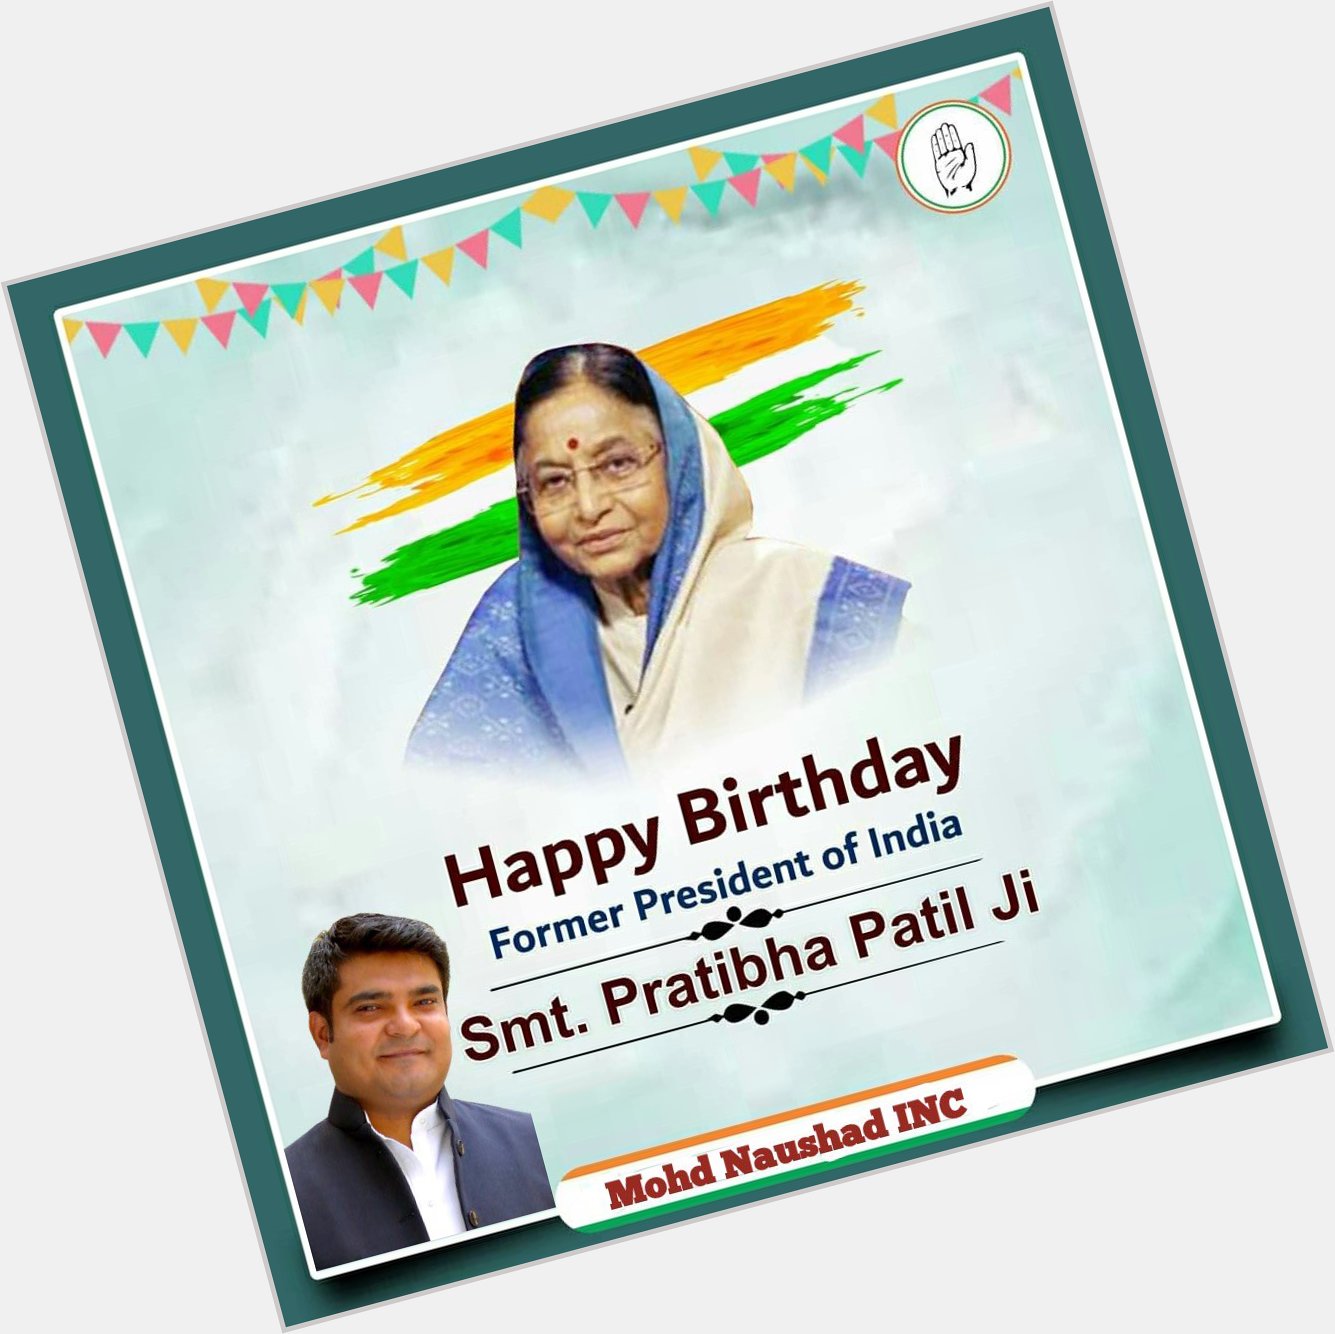 Happy Birthday To Indian First Women President Pratibha Patil ji 